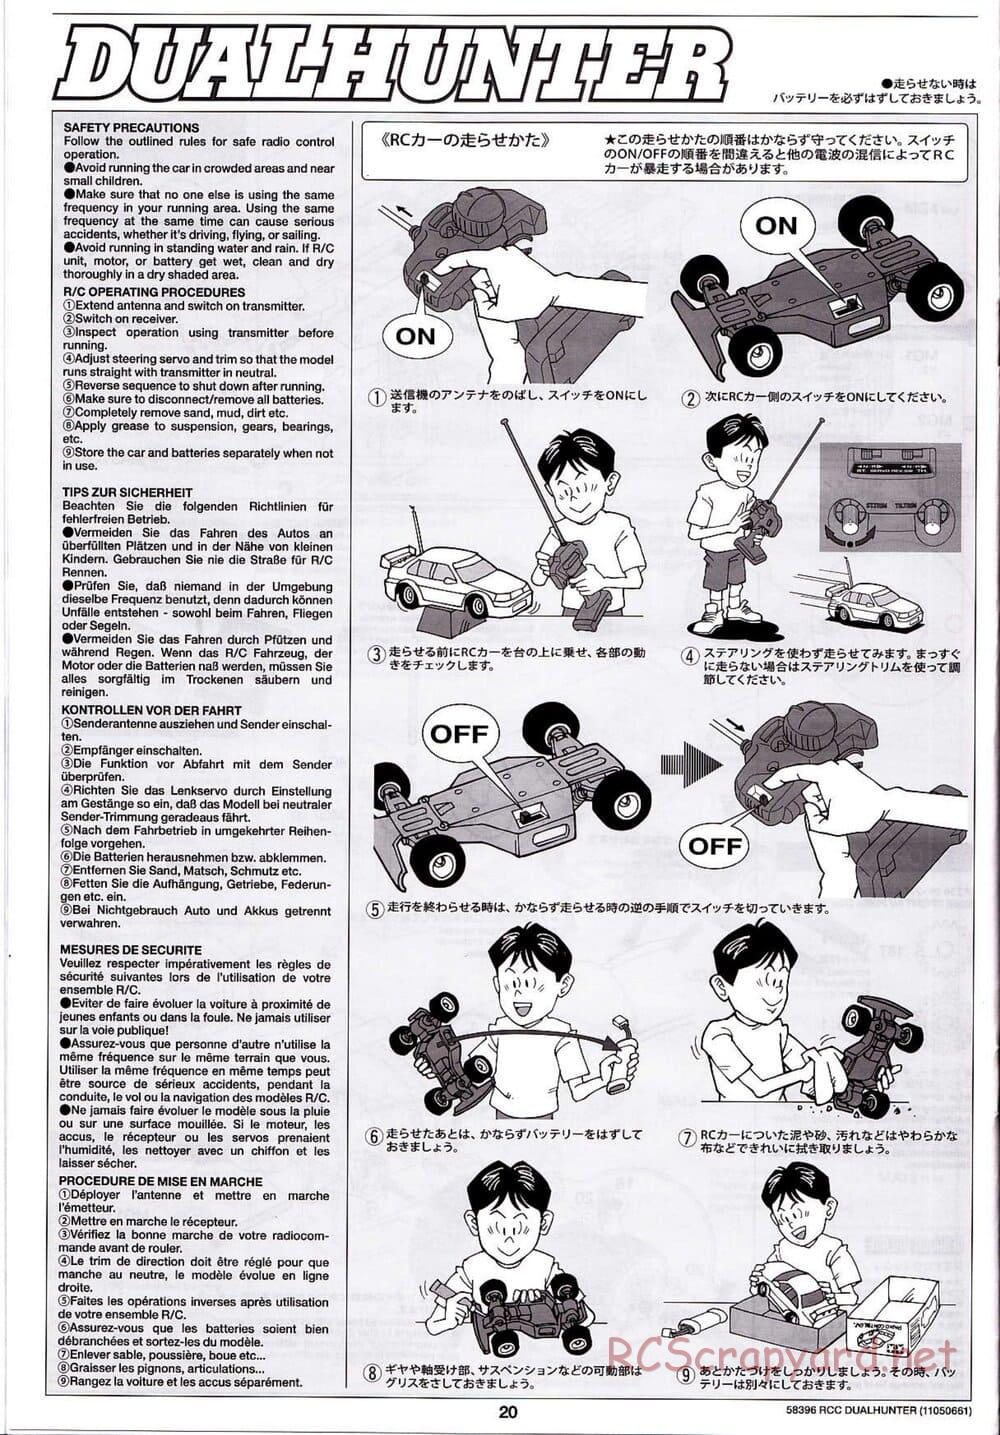 Tamiya - Dualhunter - WR-01 Chassis - Manual - Page 20